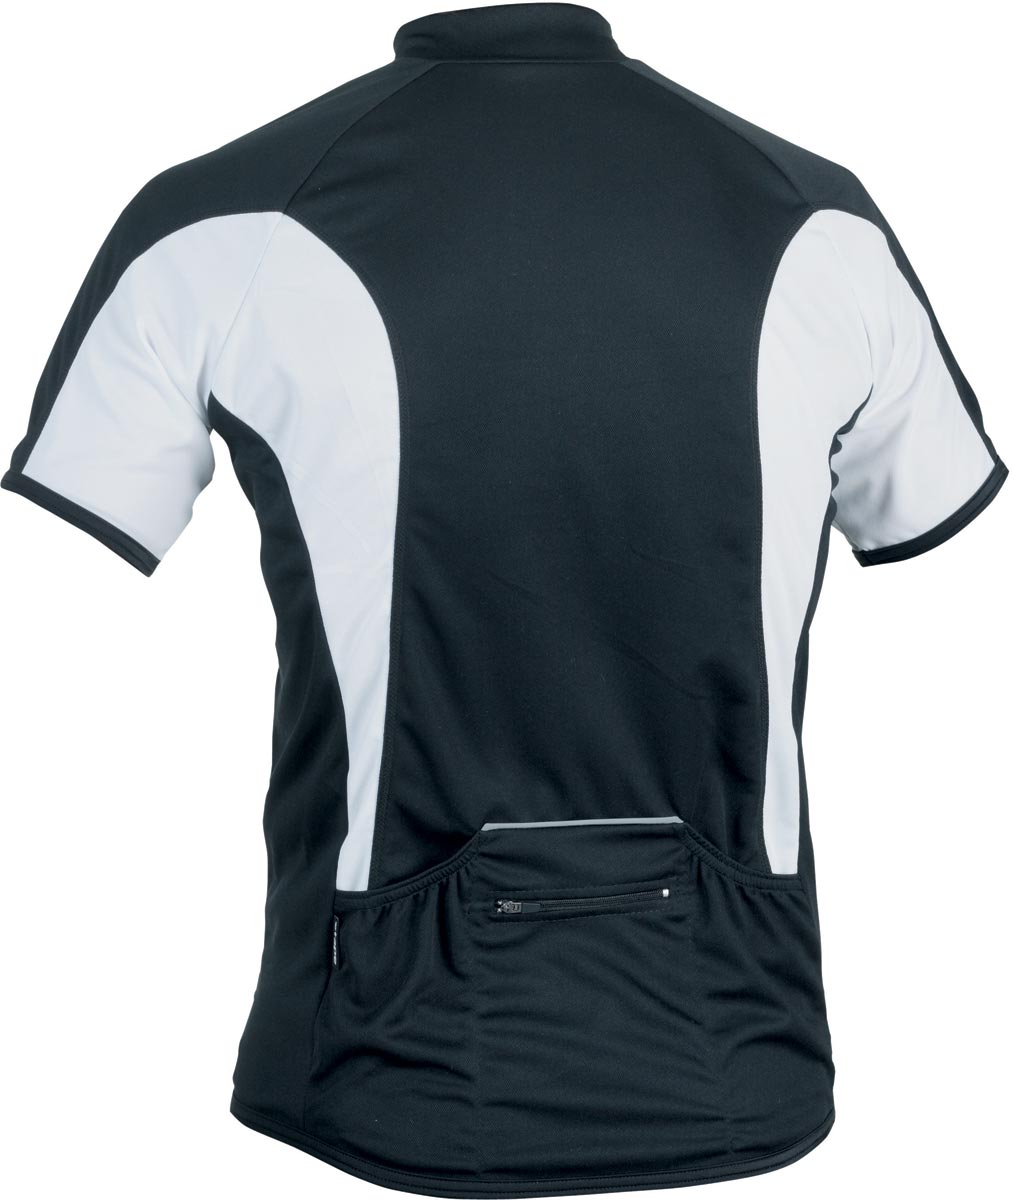 BASE - Men's cycling jersey